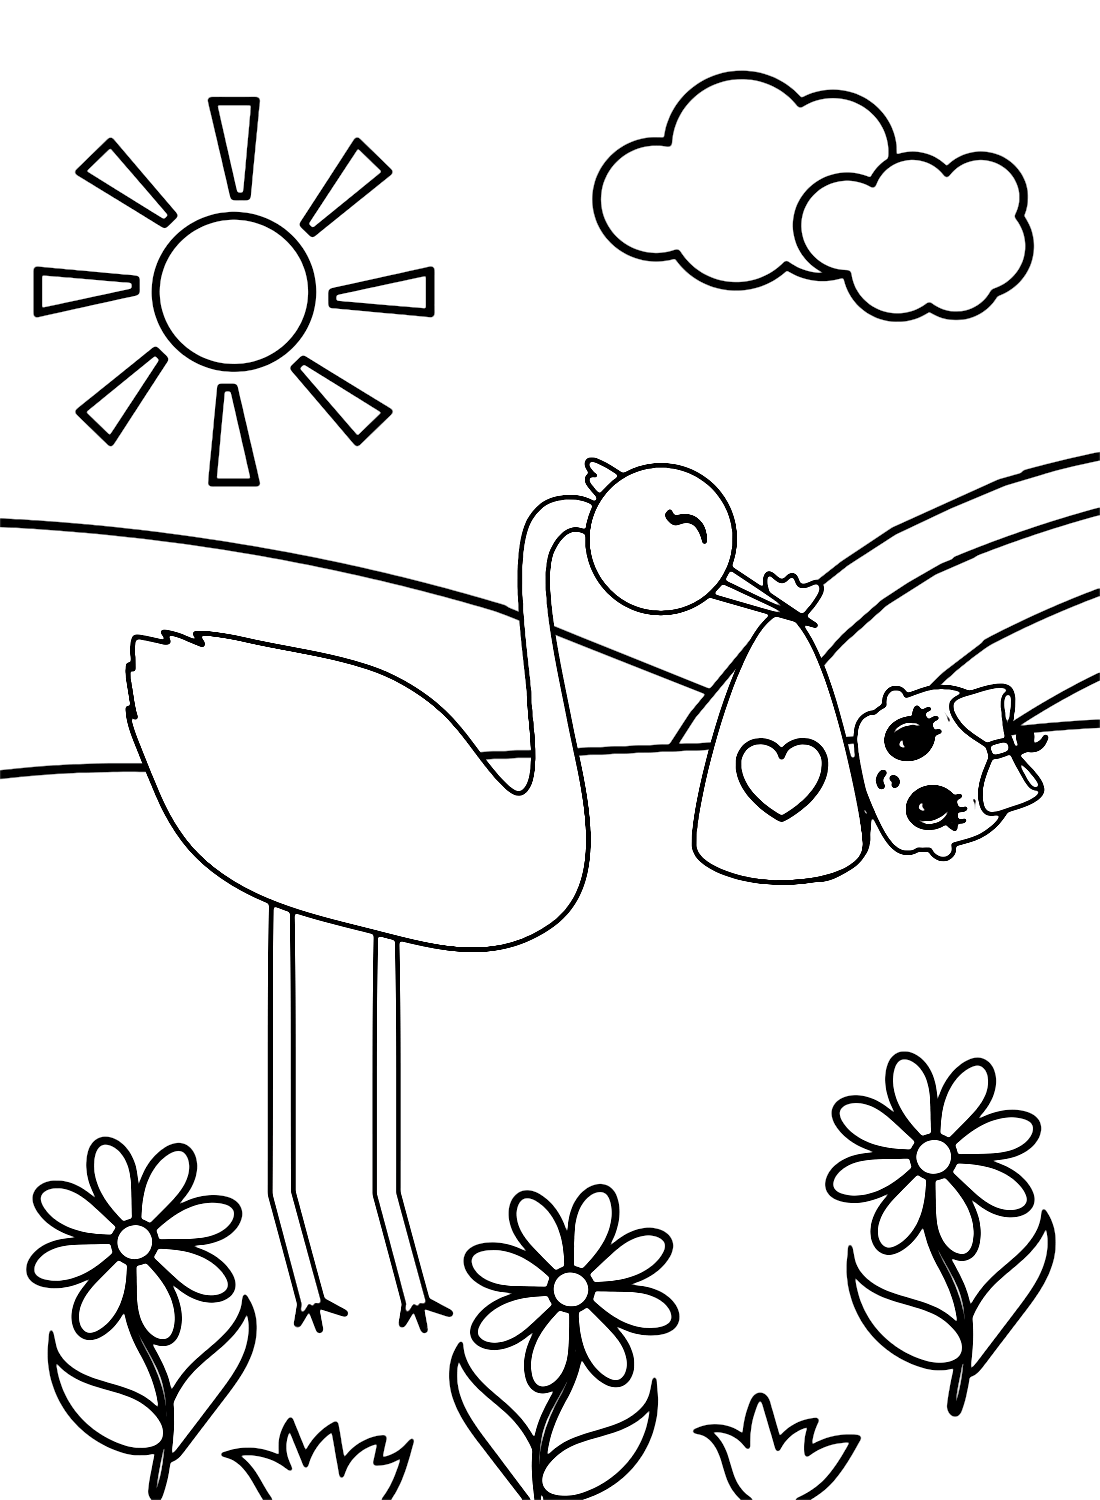 Ooievaar met baby in stoffen tas van Stork